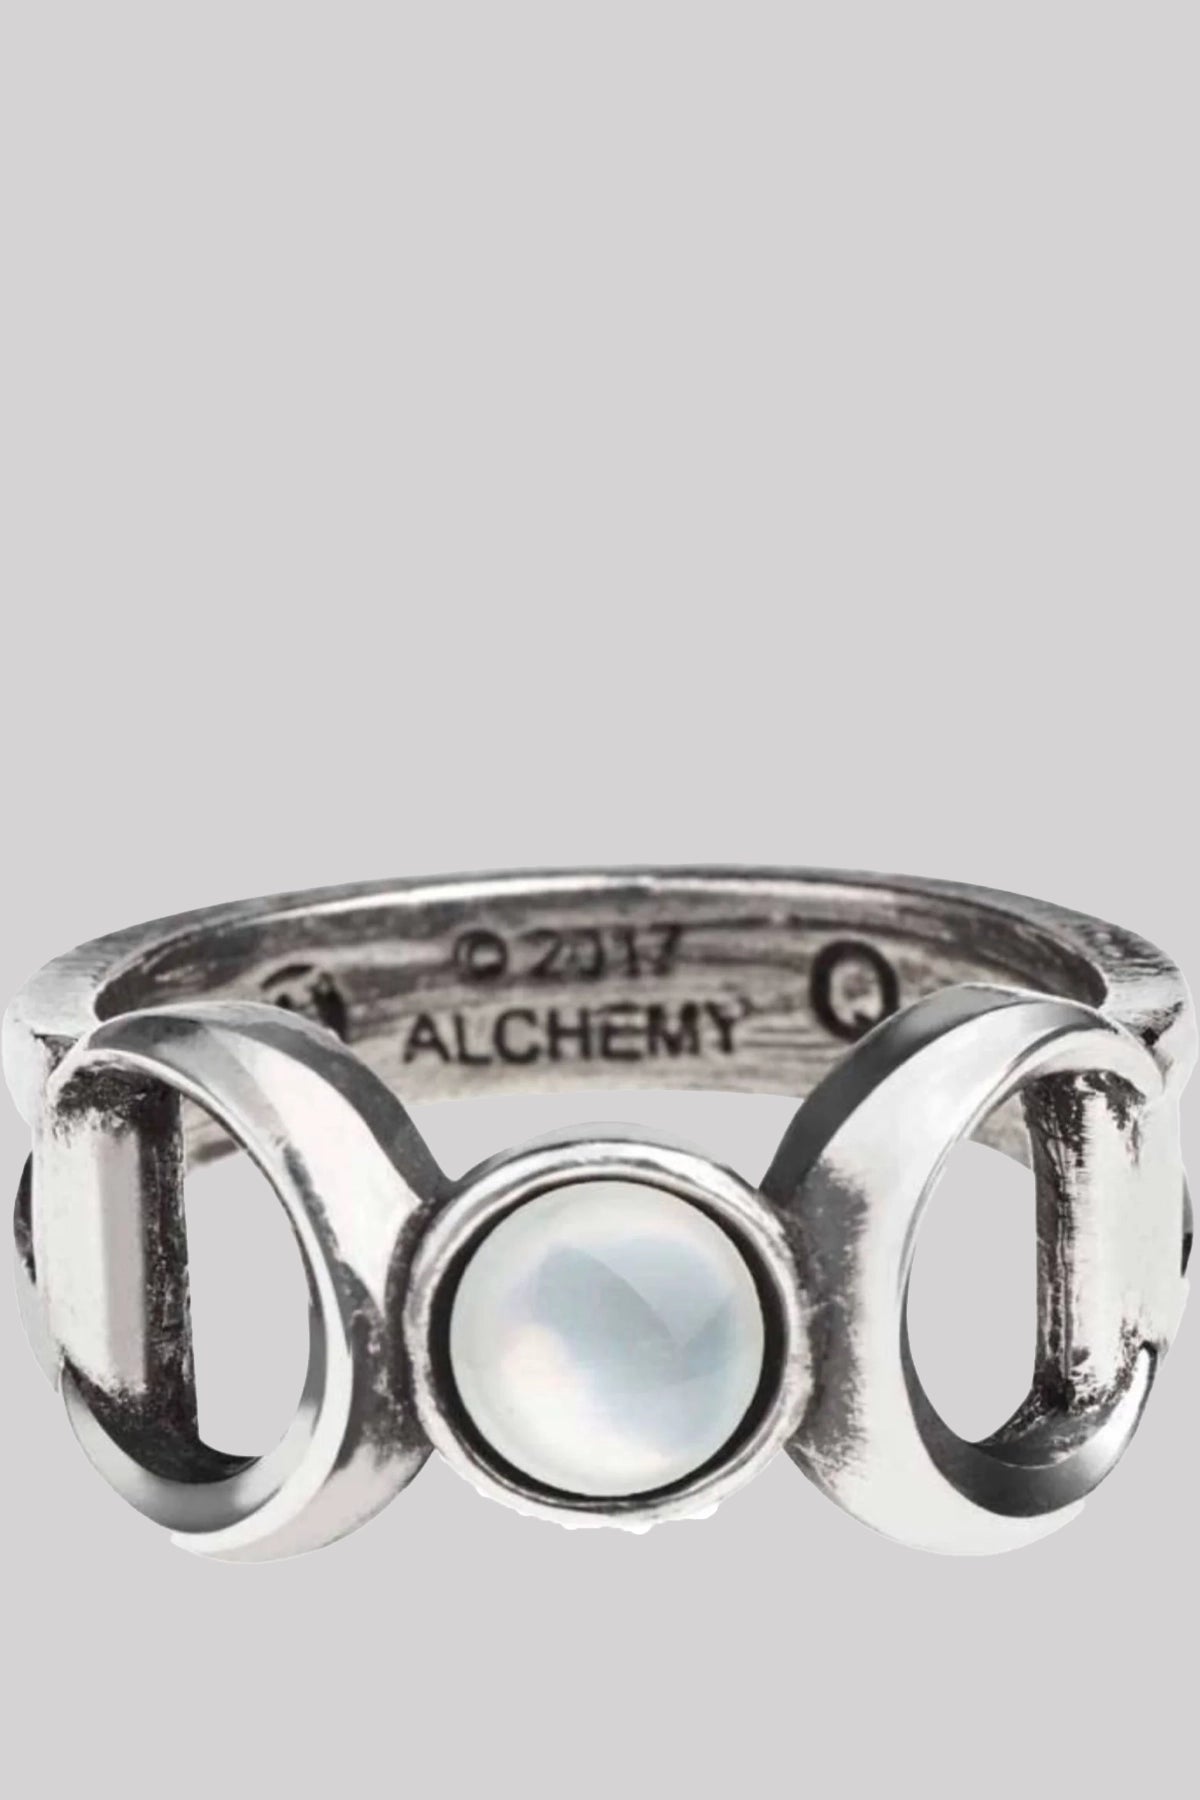 Alchemy England Triple Goddess Moon Ring